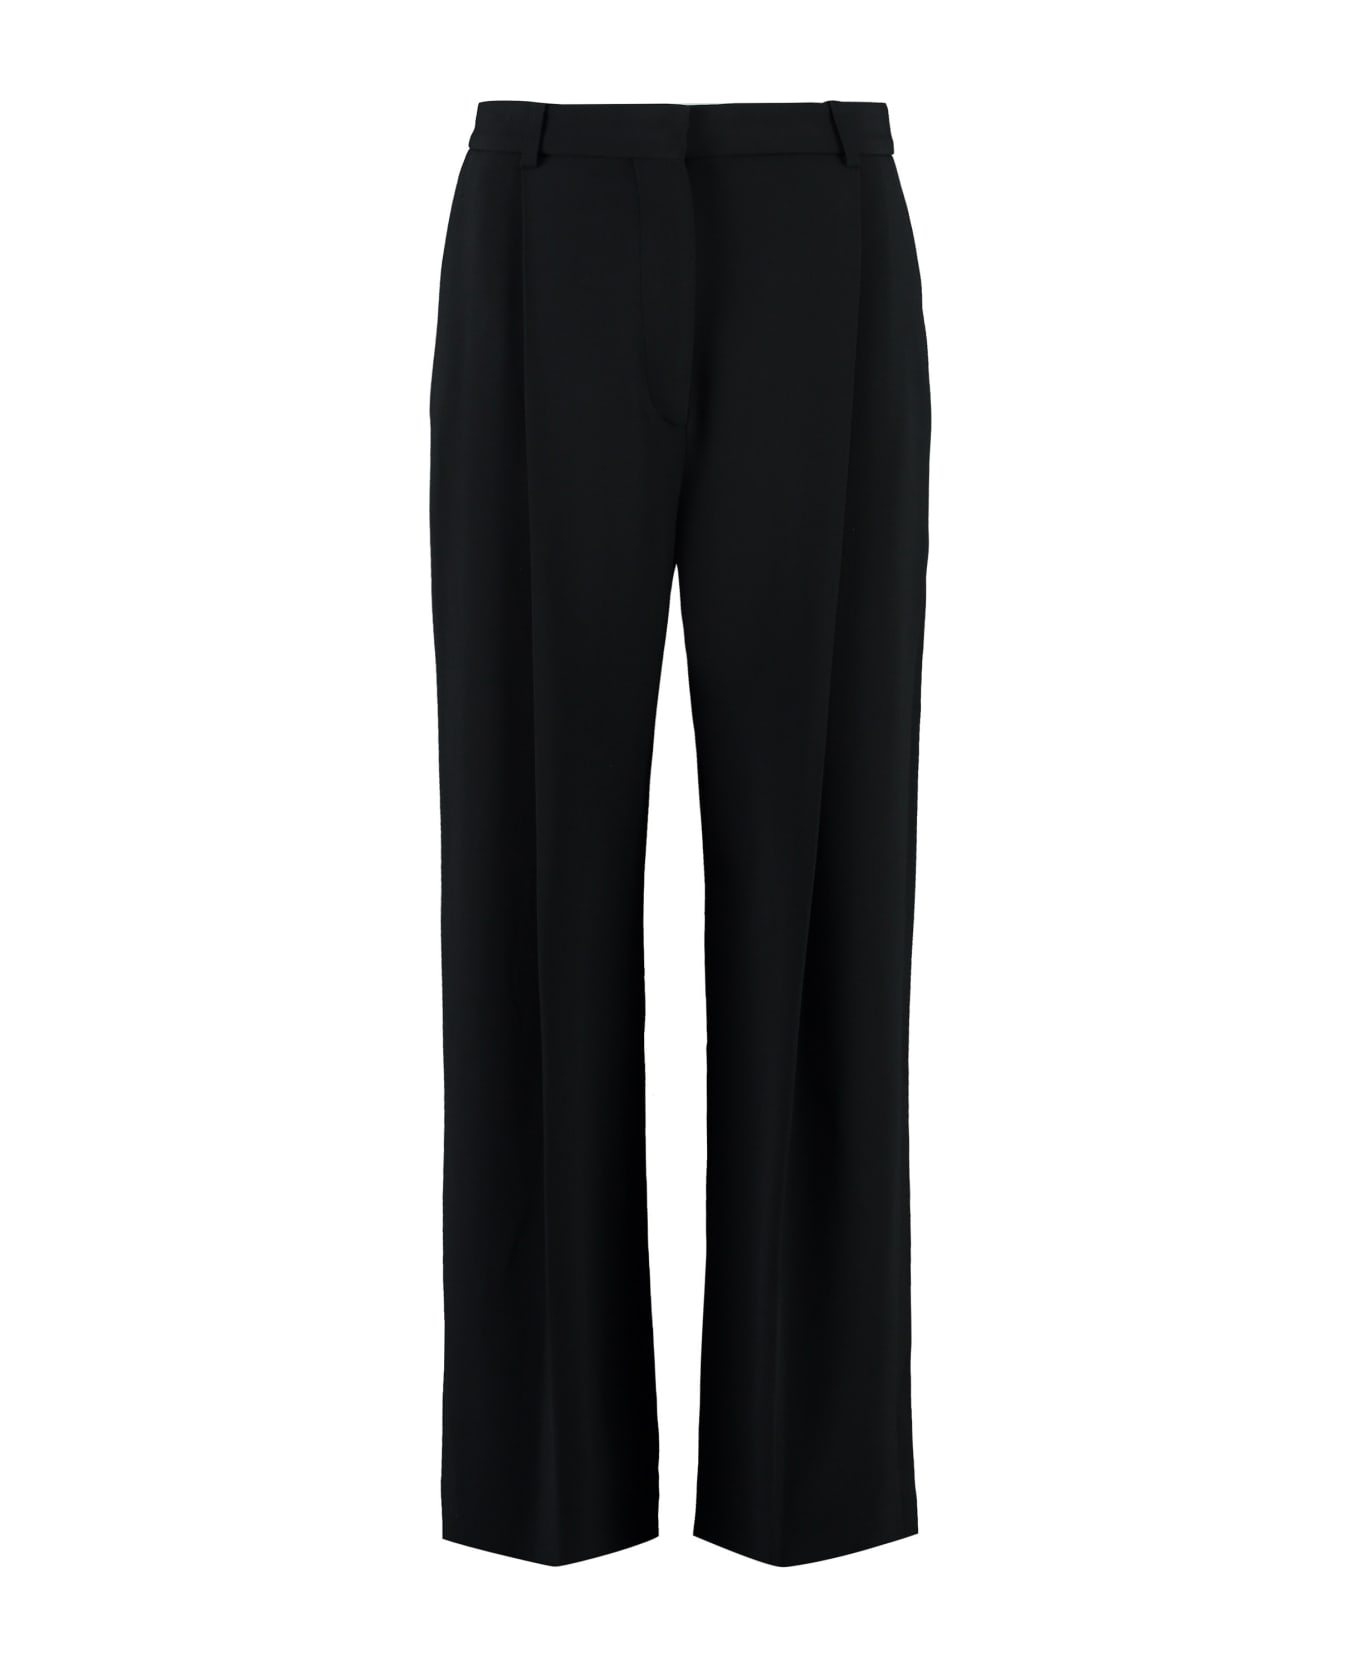 Victoria Beckham Jersey Trousers - black